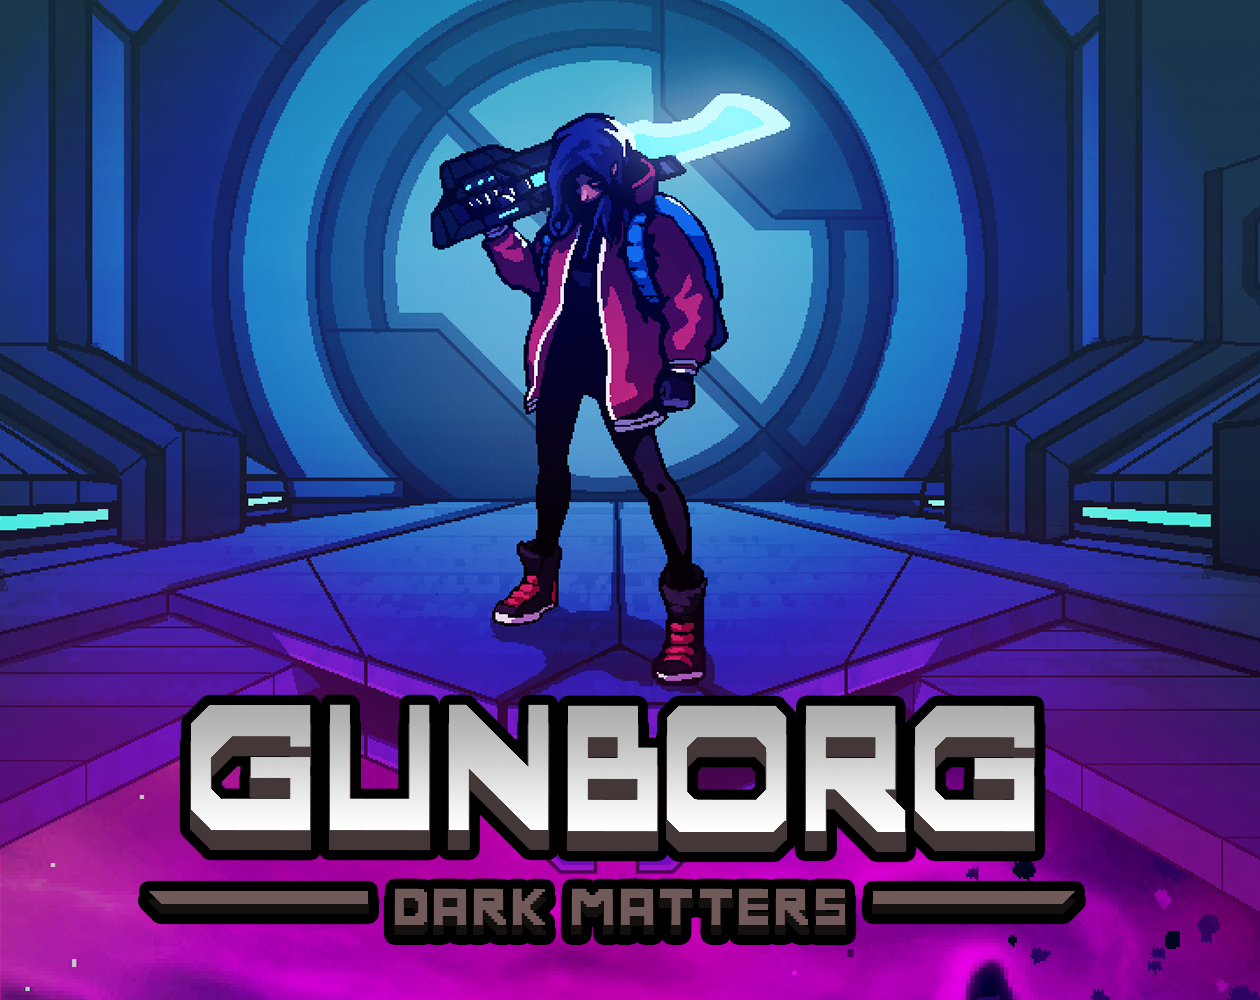 Gunborg: Dark Matters Art